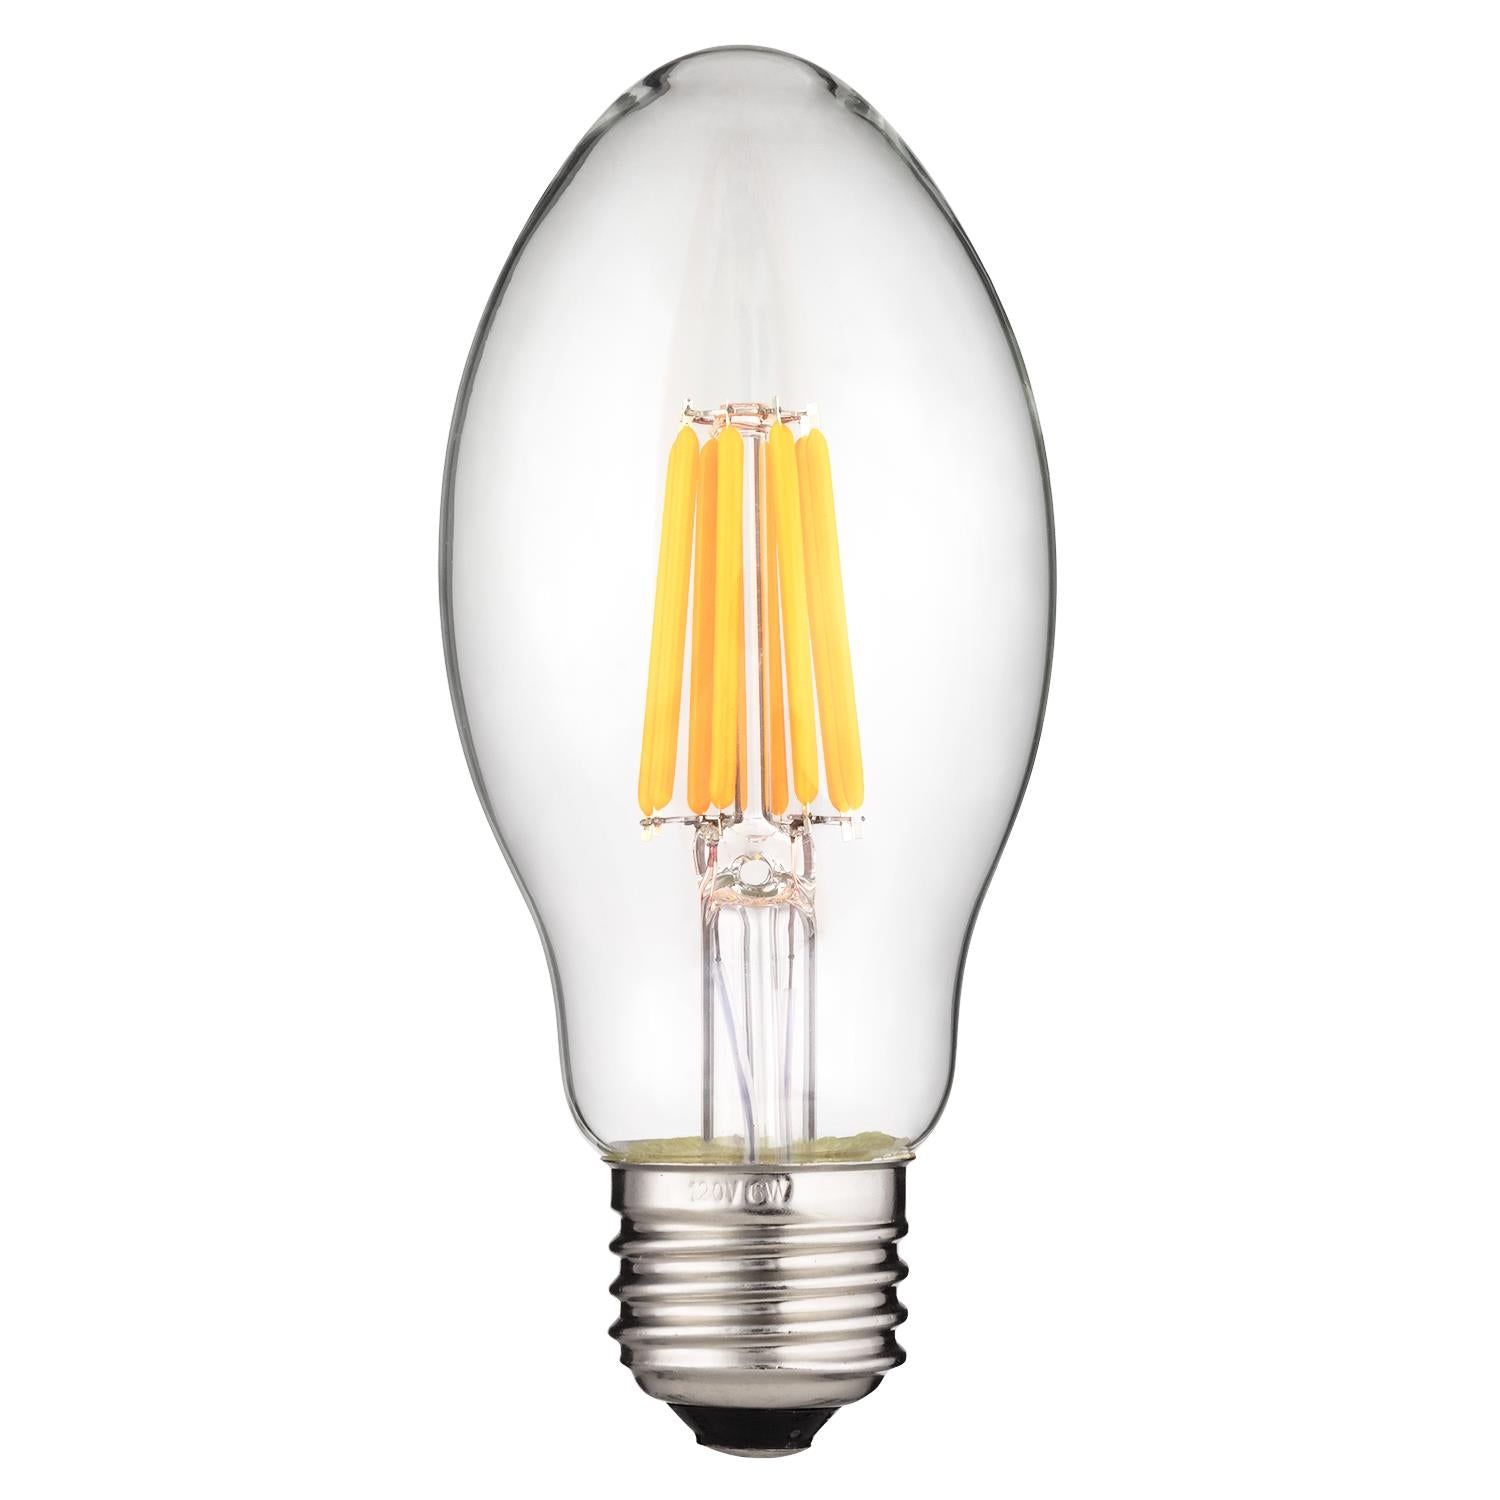 SUNLITE 80616-SU LED Vintage 6w Light Bulb Medium (E26) Base Warm White